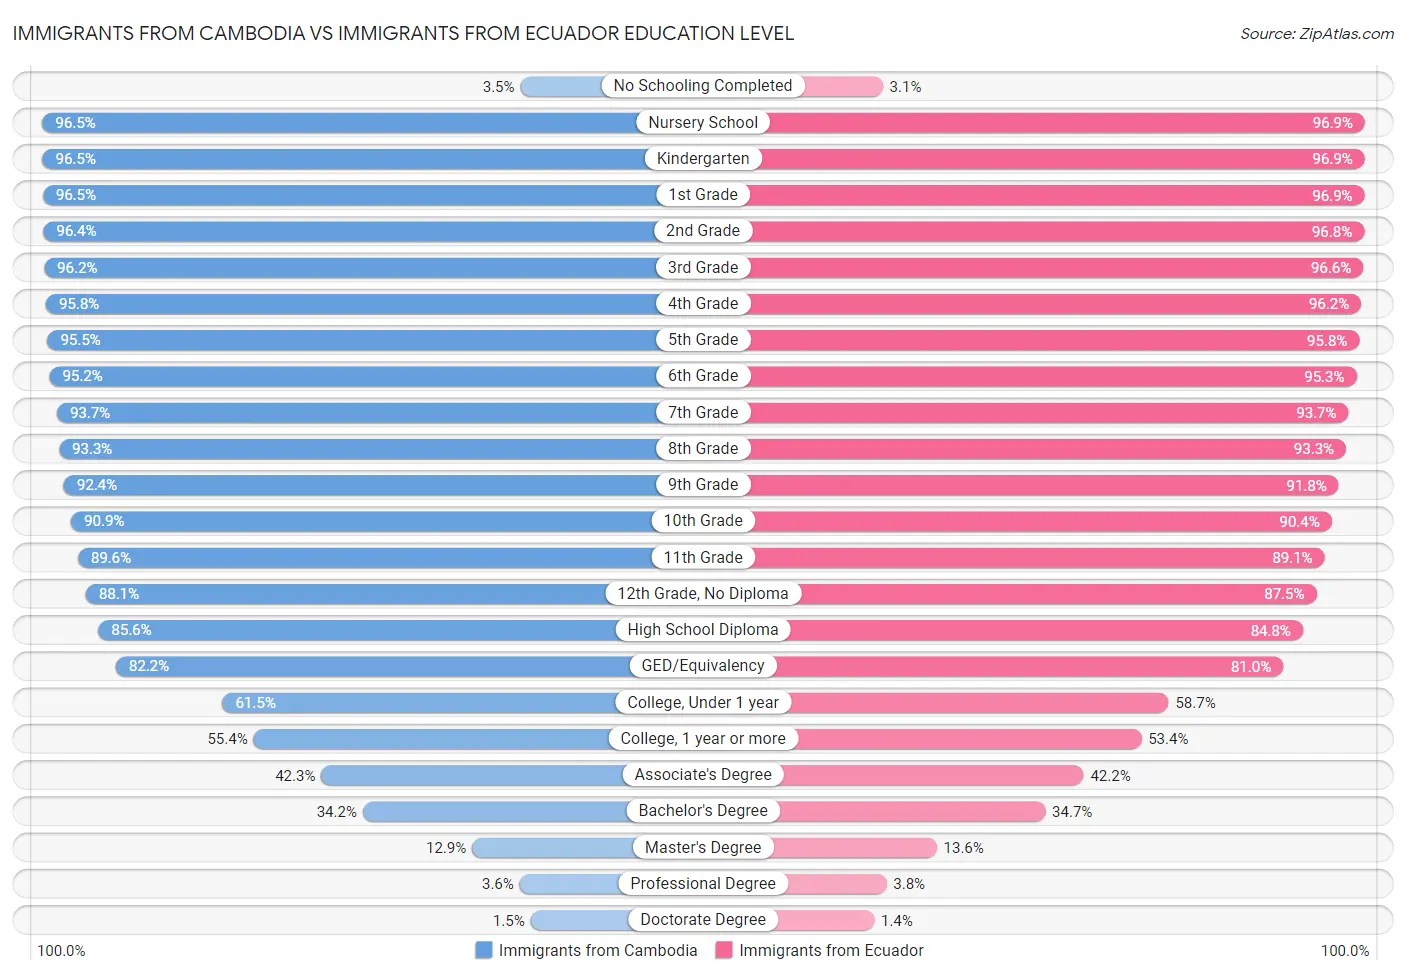 Immigrants from Cambodia vs Immigrants from Ecuador Education Level